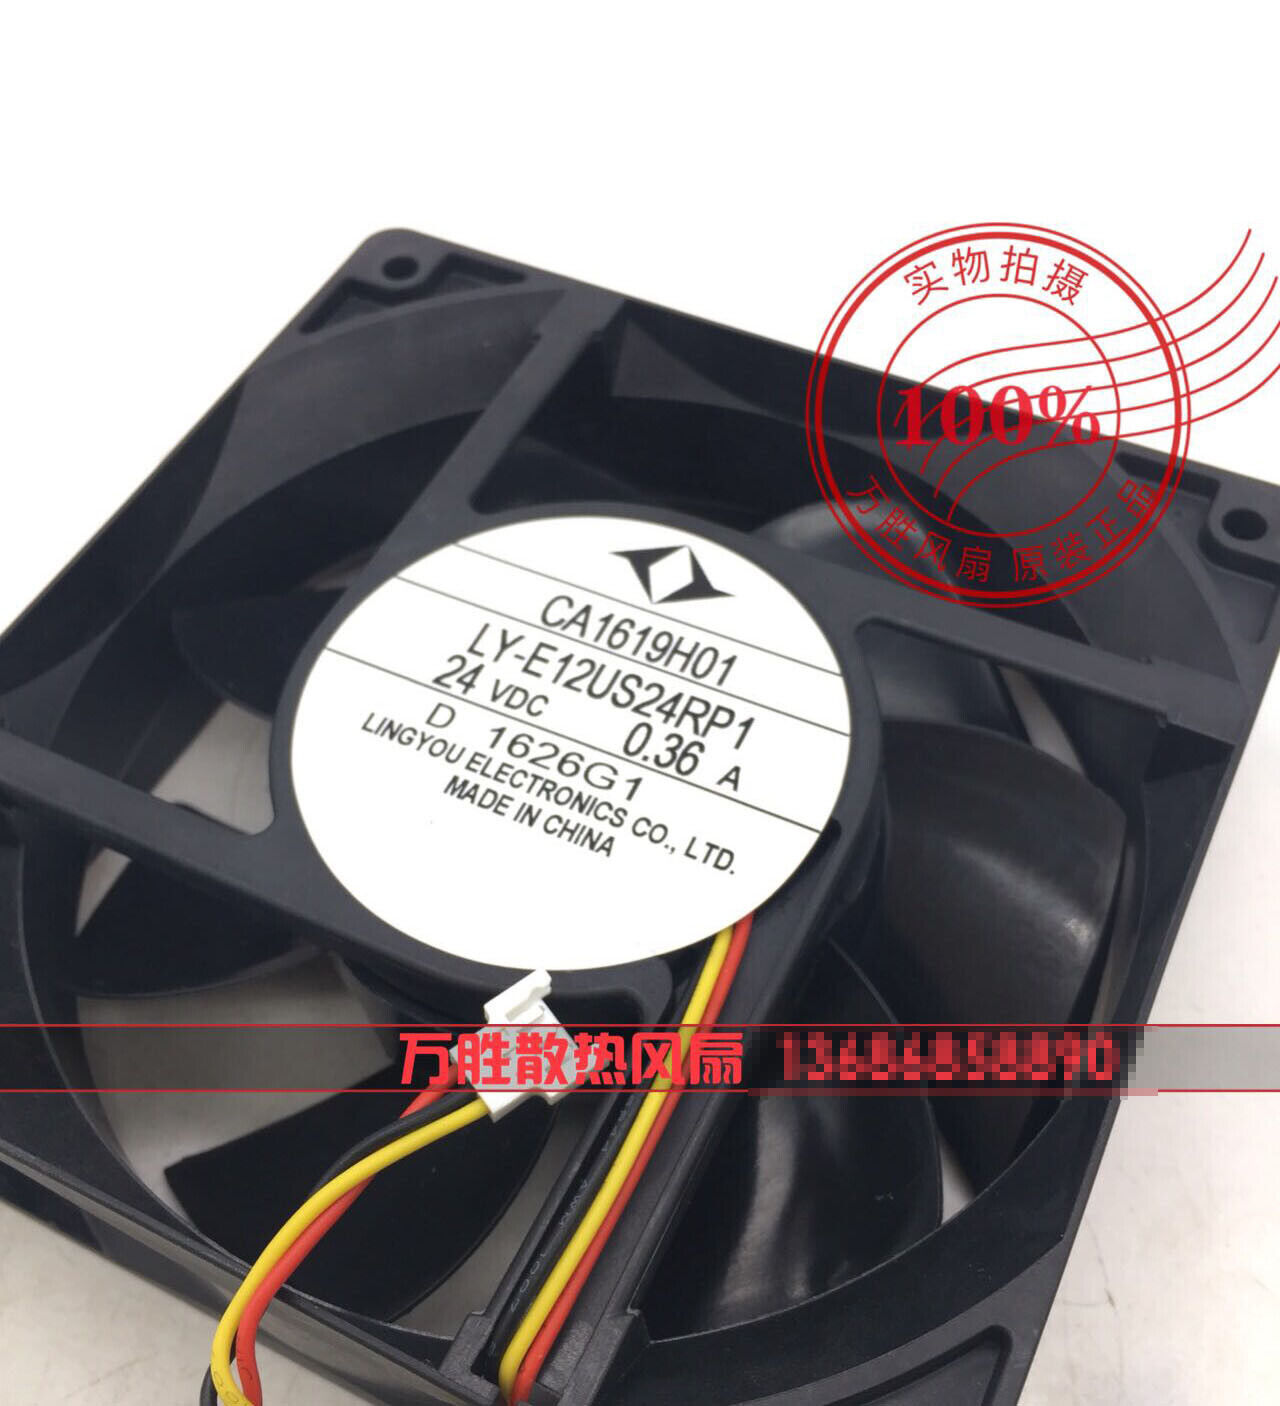 1pcs  CA1619H01 LY-E12US24RP1 24V 0.36A 12038 inverter cooling fan